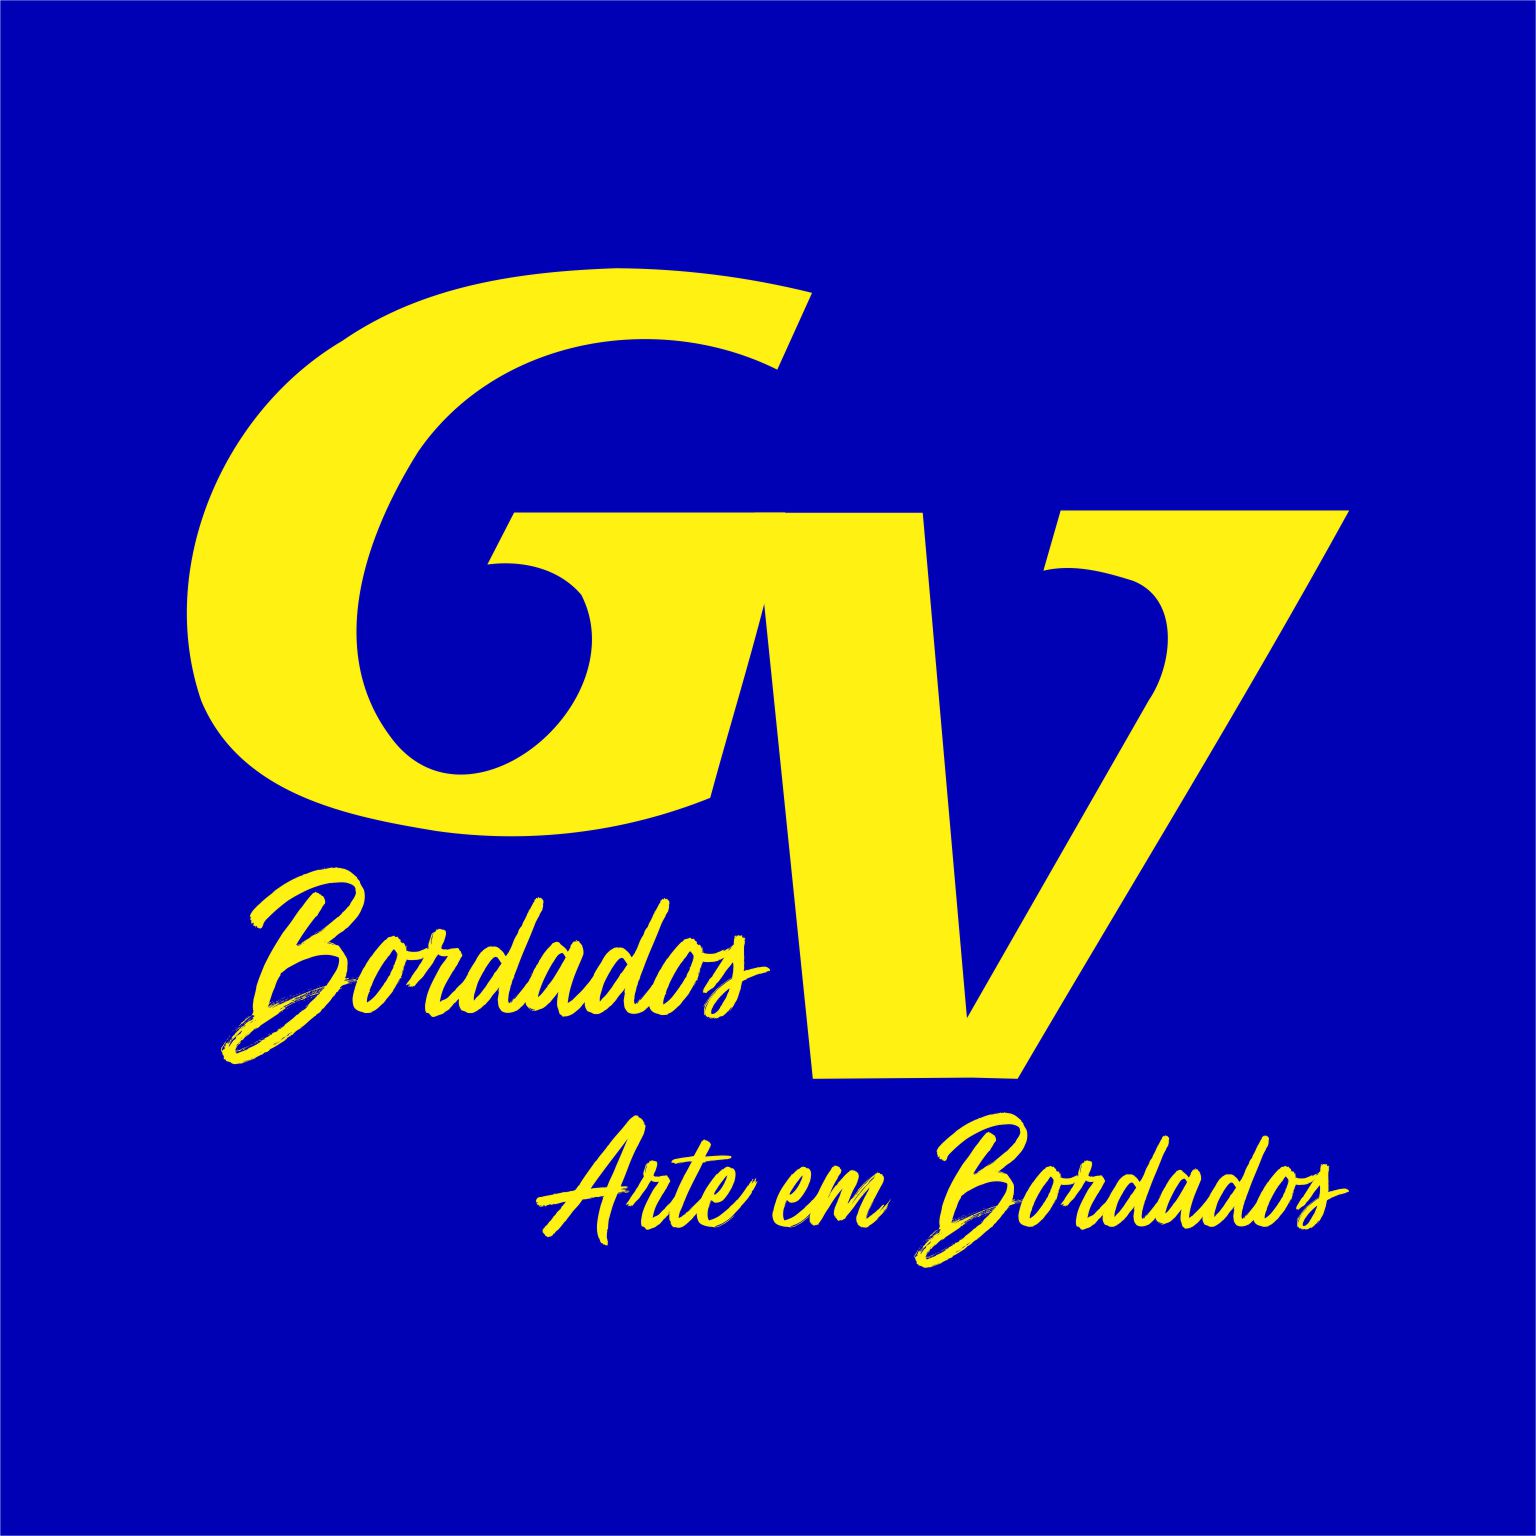 GV Bordados